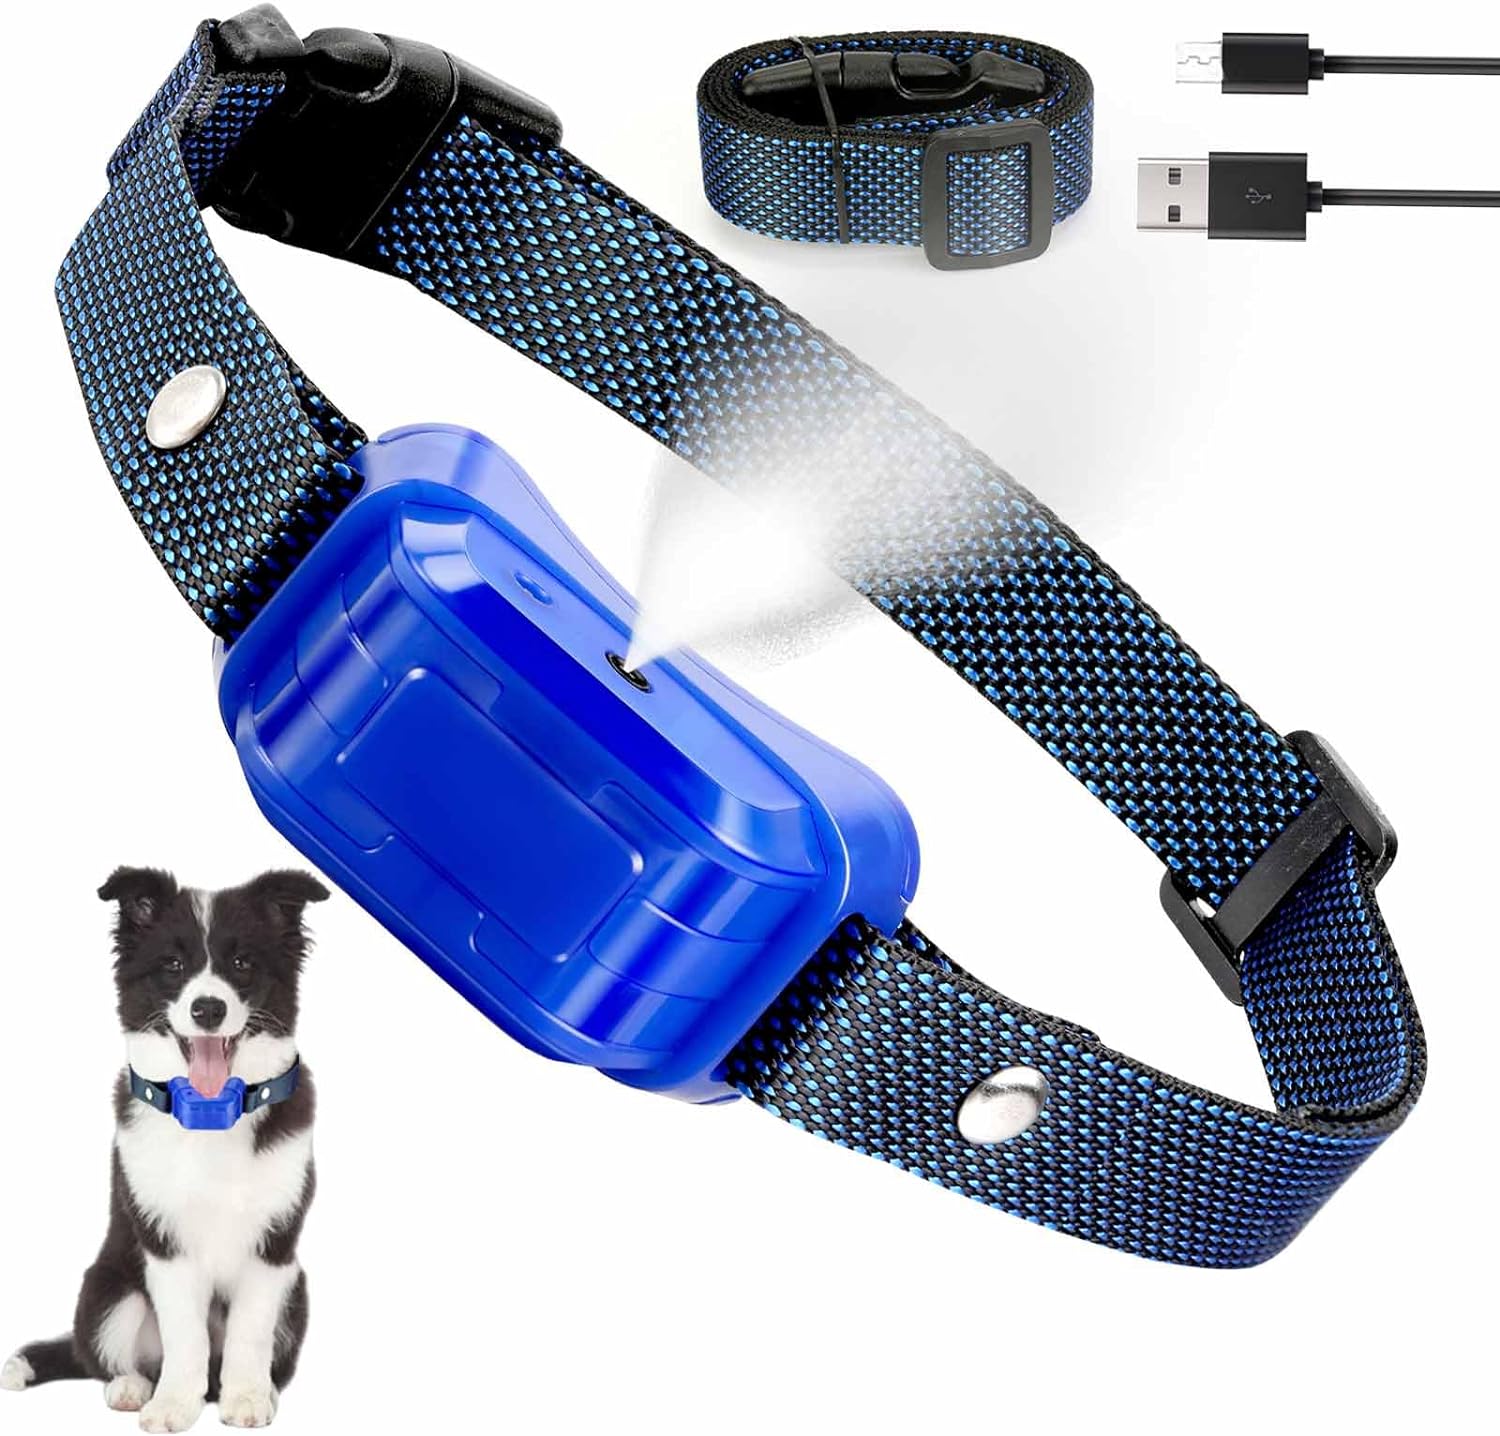 Citronella Bark Collar for Dogs, [NO Remote] Spray Dog Training Collar, Humane Citronella Dog Barking Collars, Effective Anti Barking Control Spray Collar for L/M/S Dogs